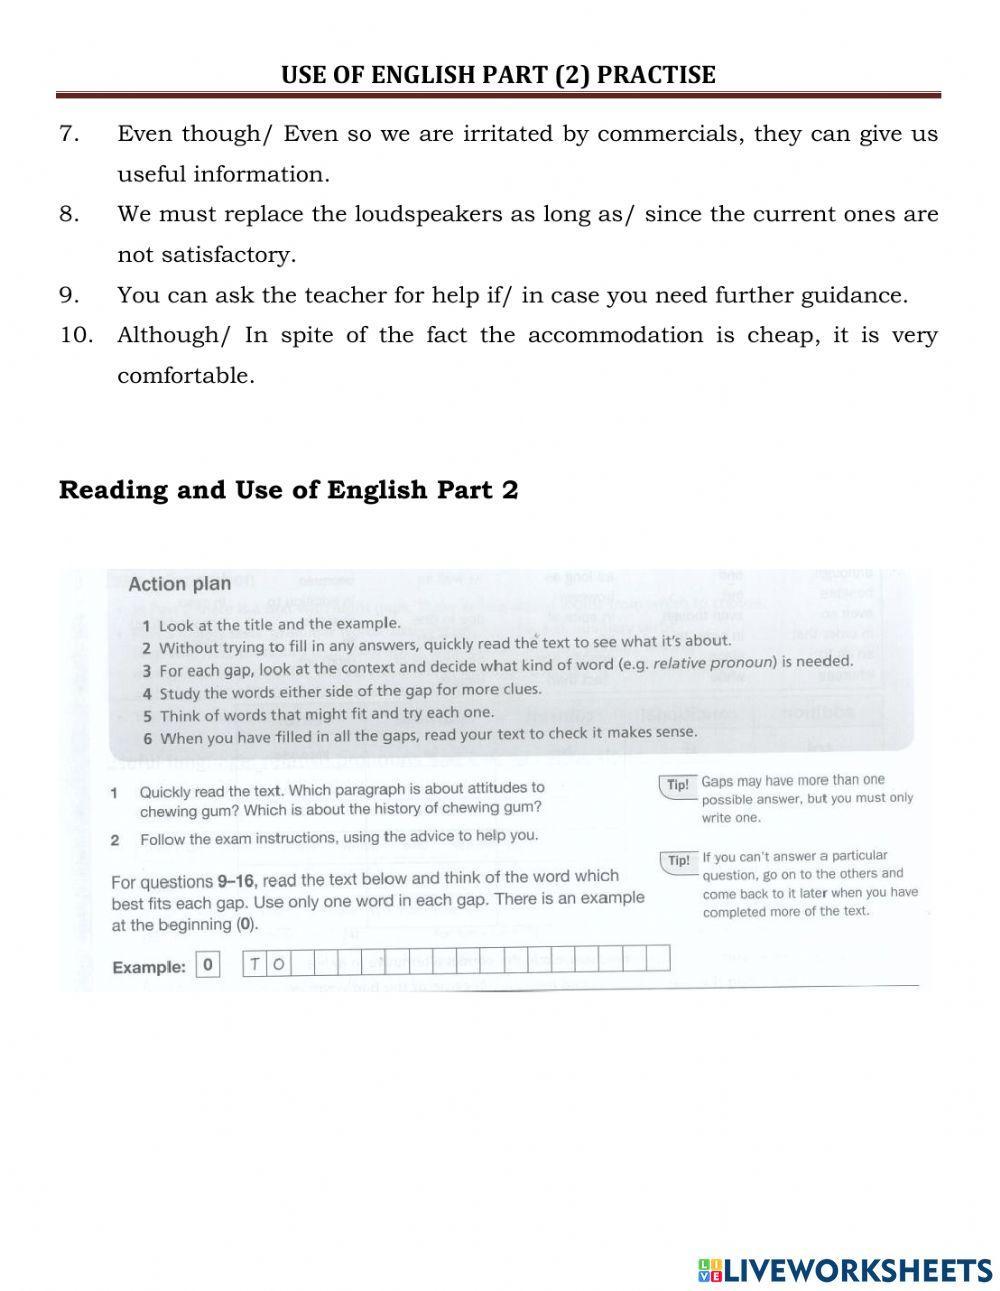 Fce use of english part 2 practise